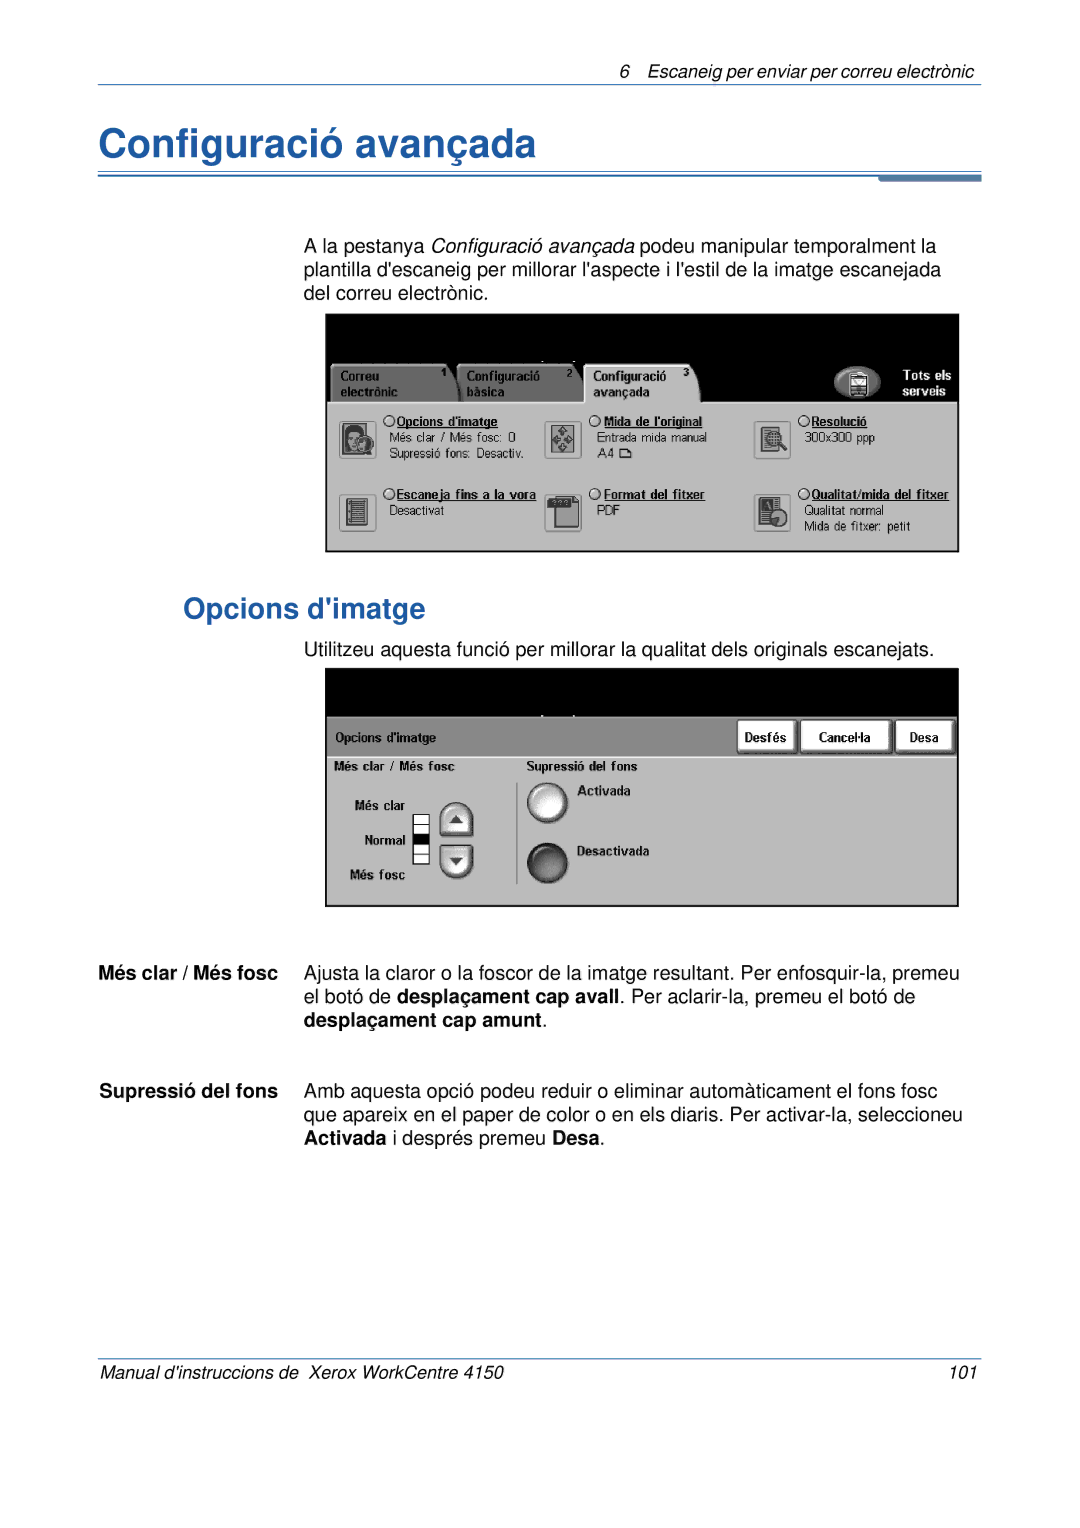 Xerox 5.0 24.03.06 manual Manual dinstruccions de Xerox WorkCentre 101 